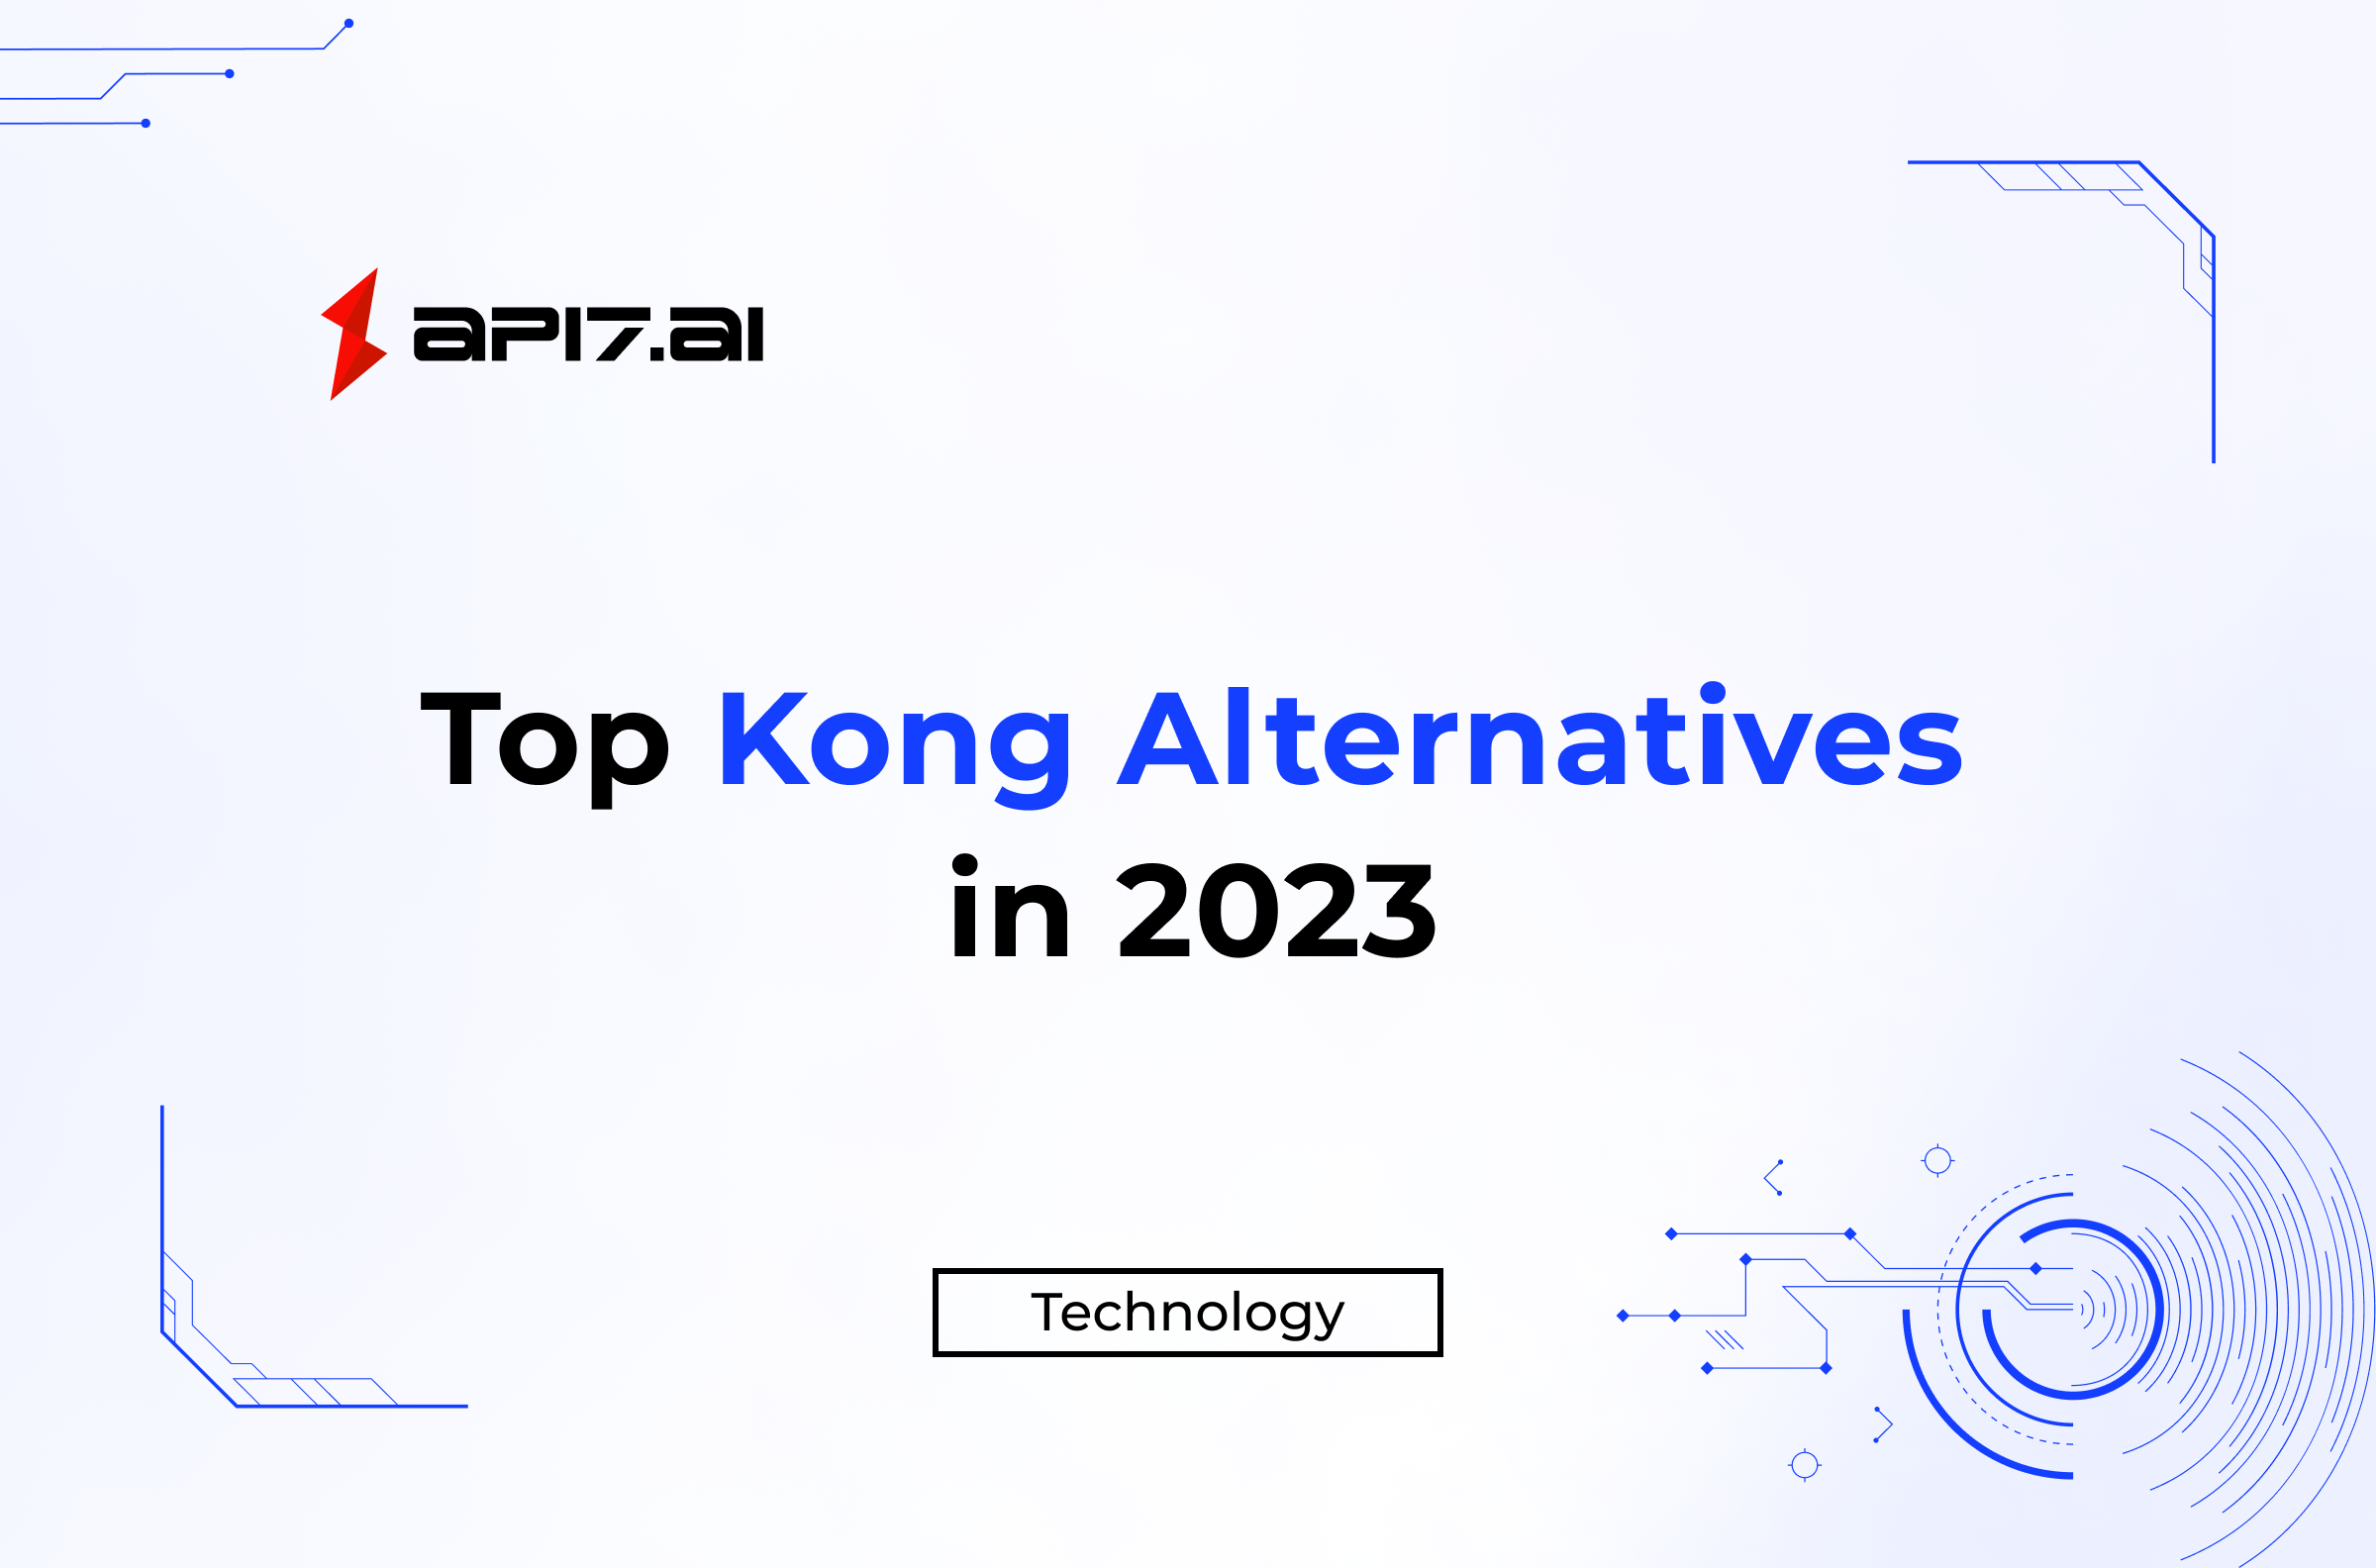 Top Kong Alternatives in 2023